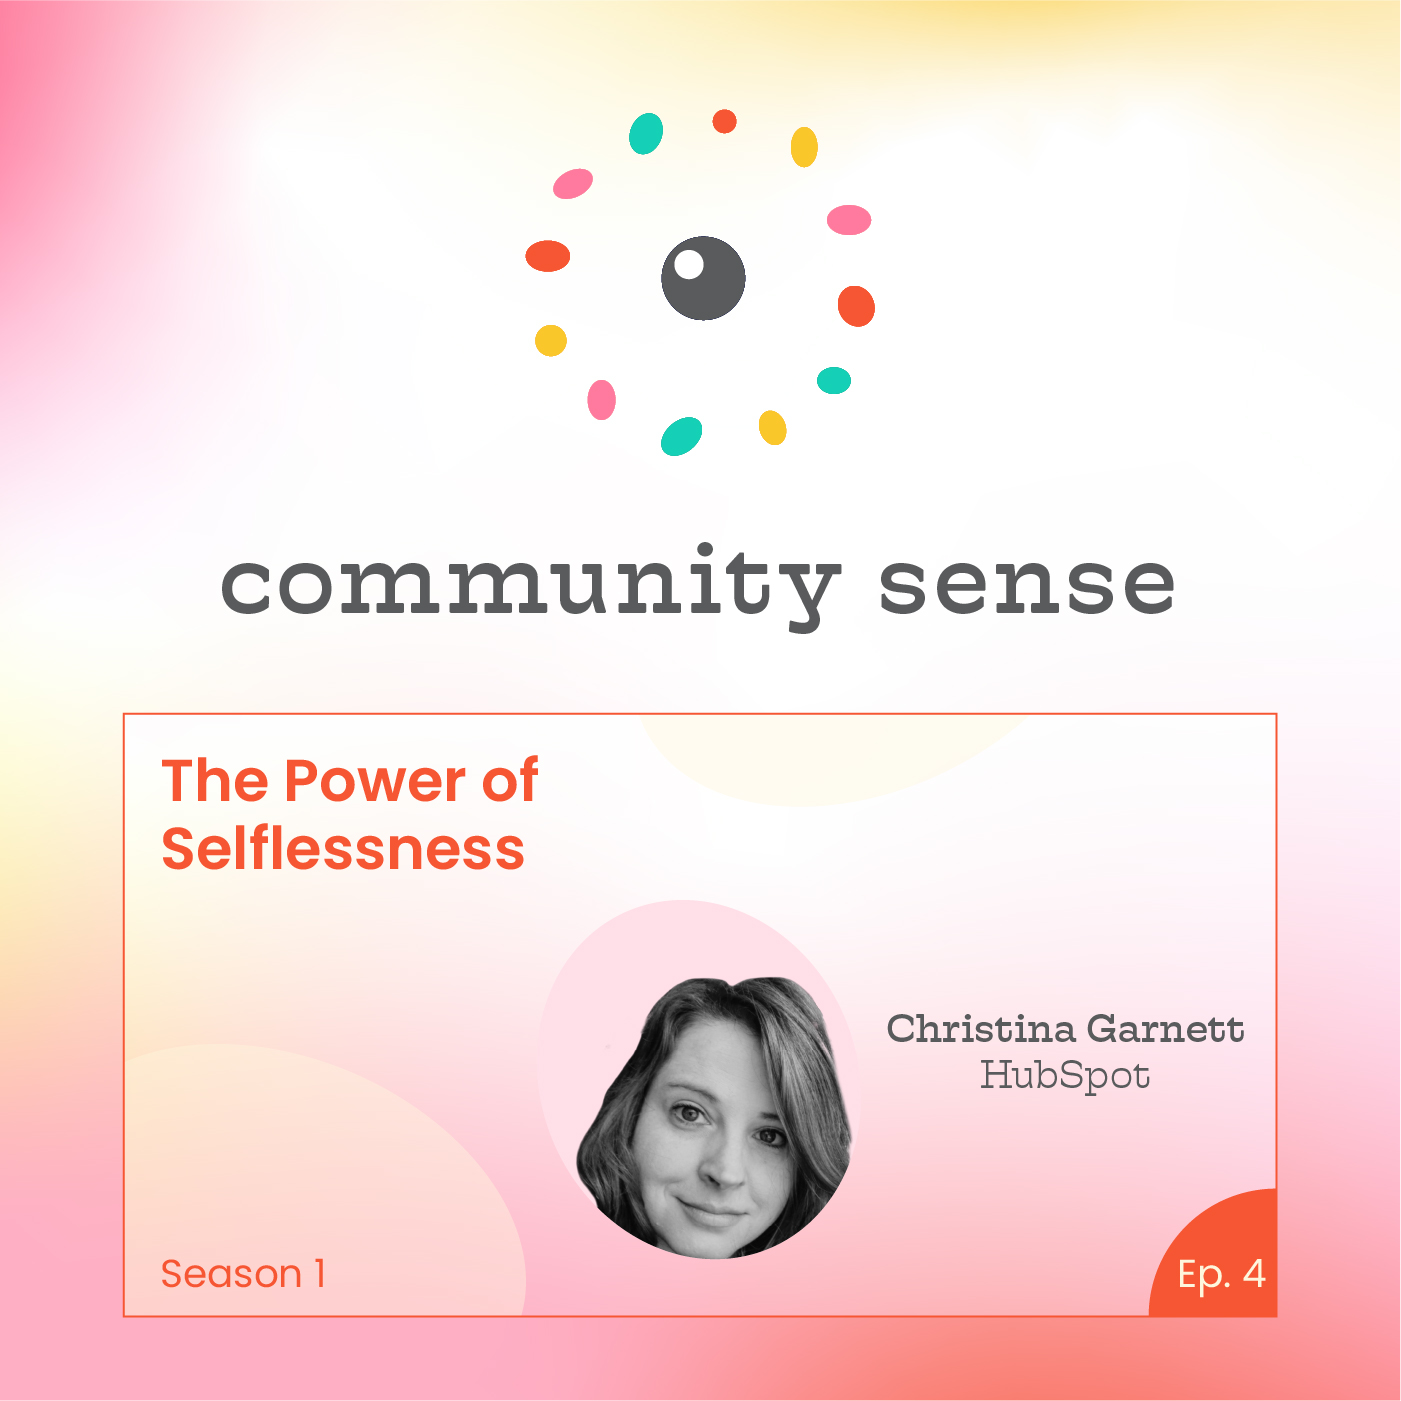 The Power of Selflessness with Christina Garnett at HubSpot